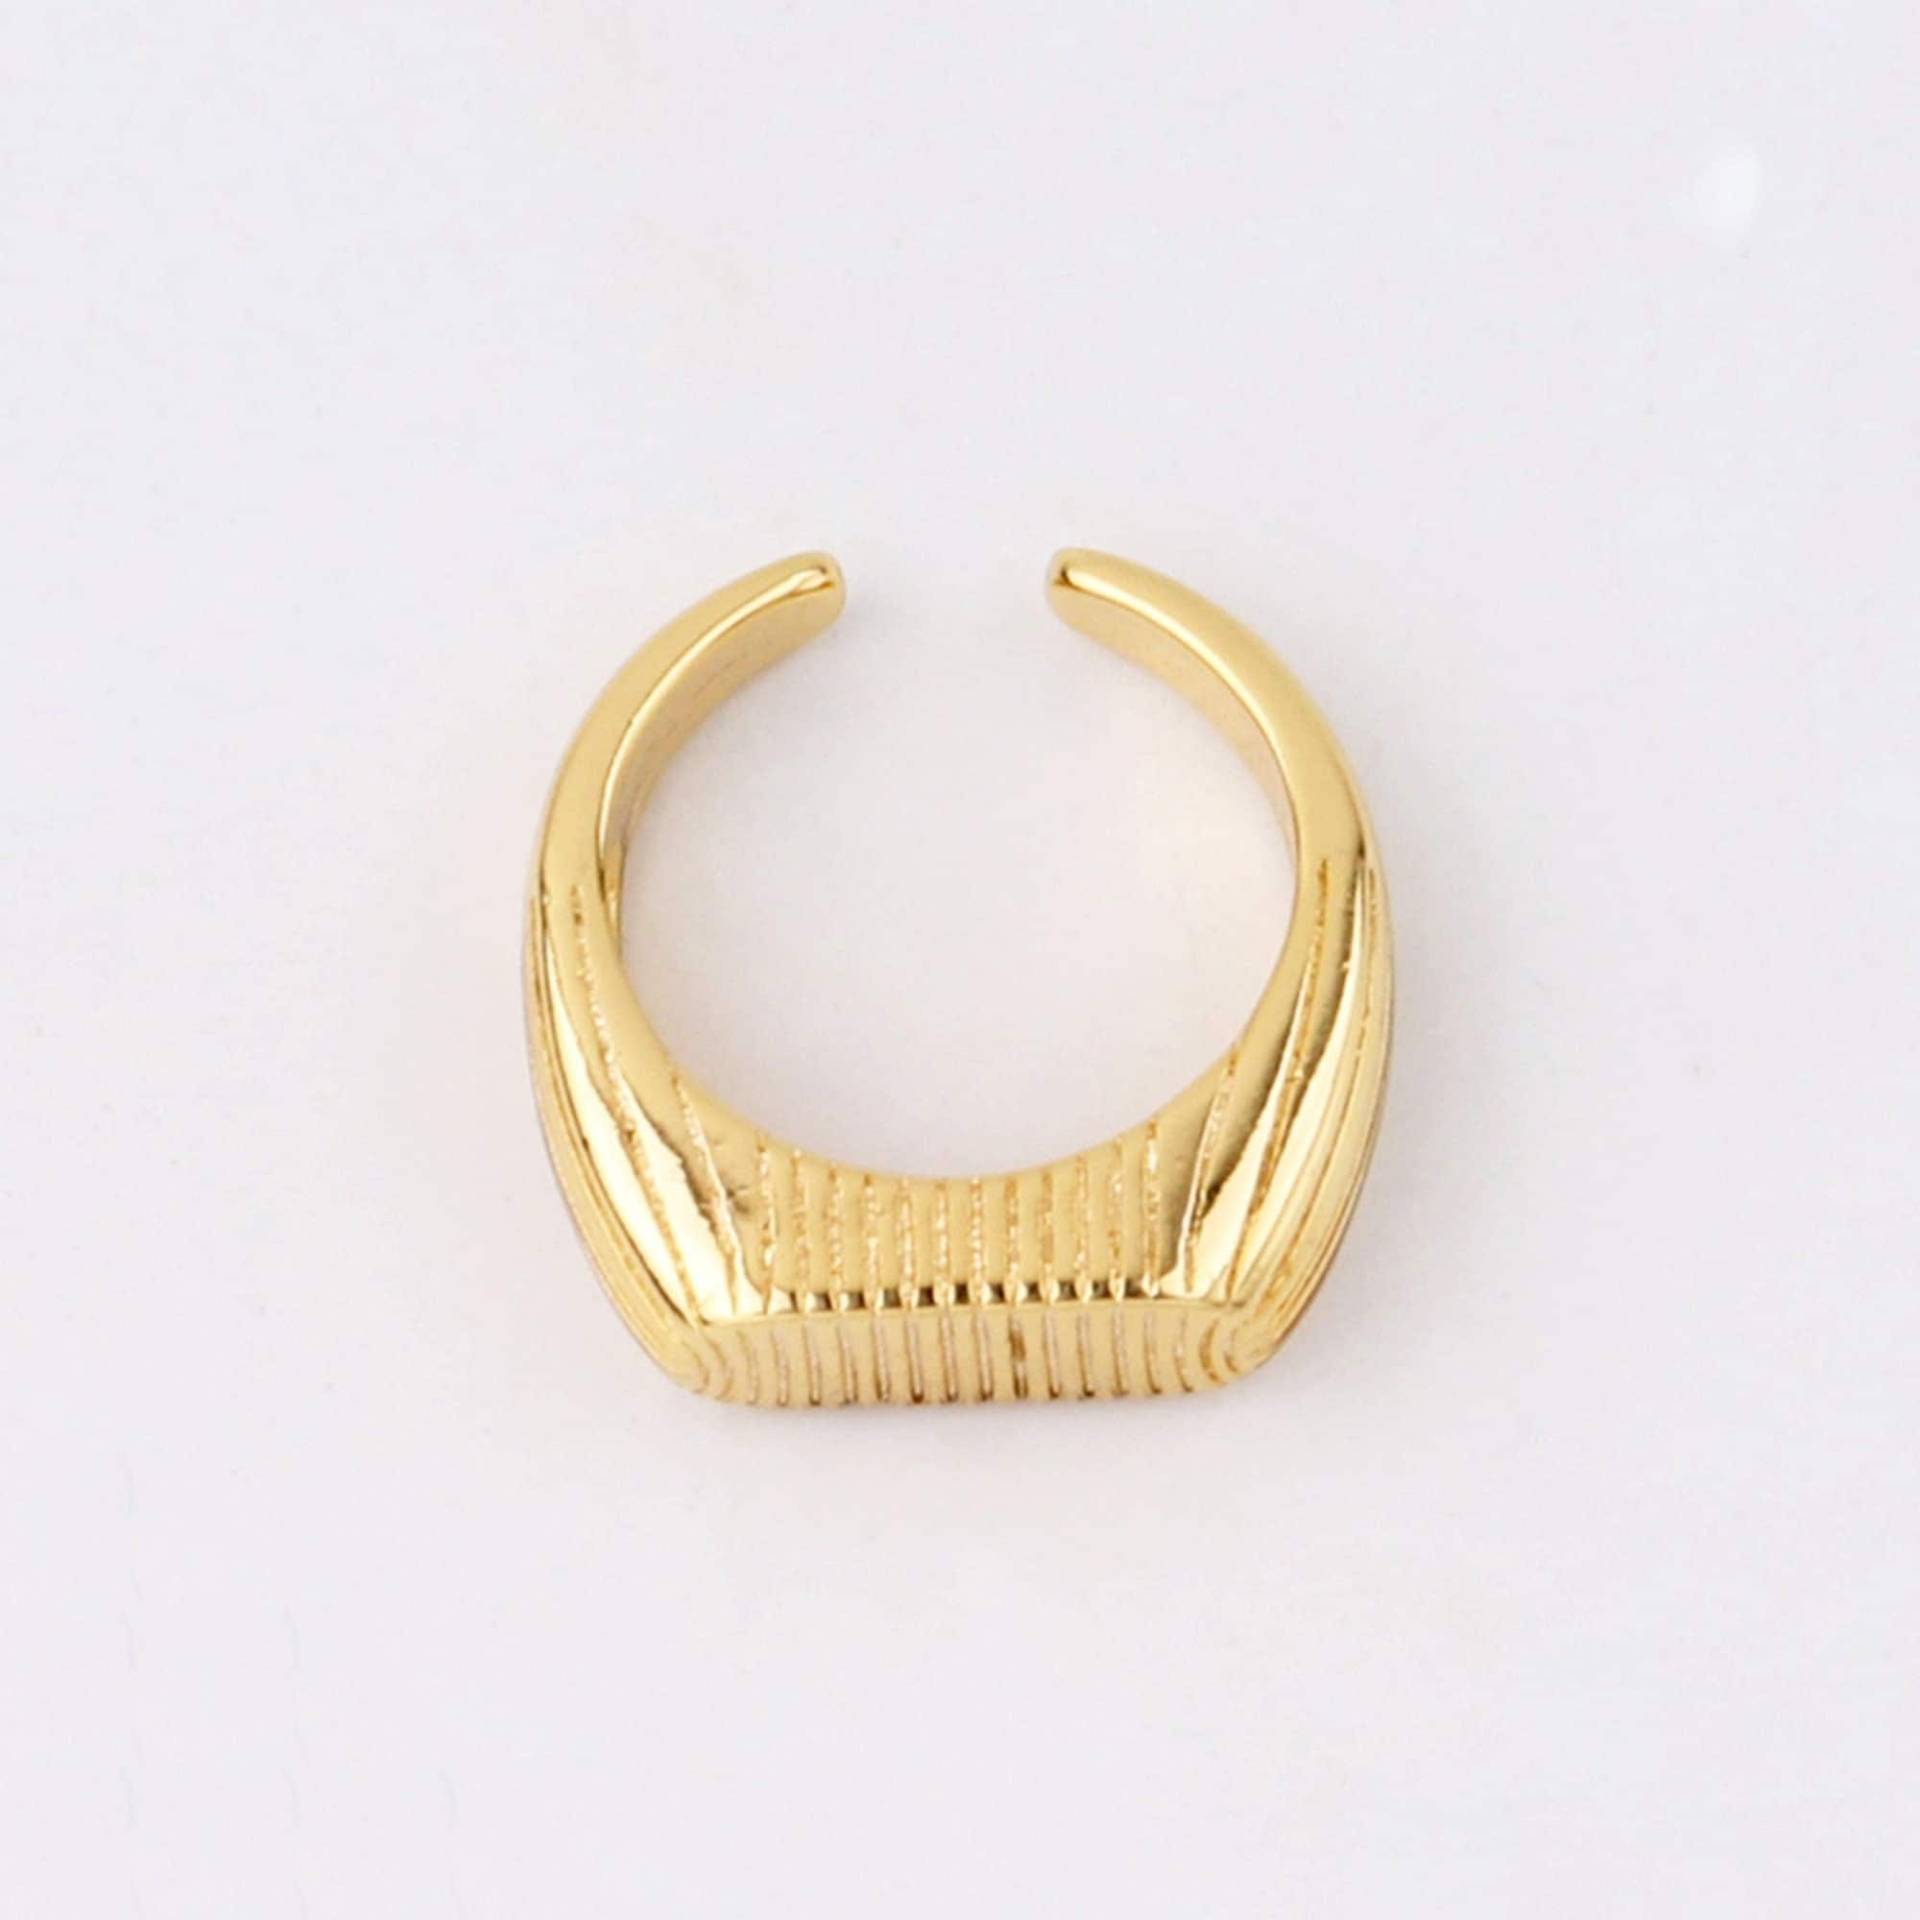 Custom Handmade 1Stk 18Kt Gold Filled Verstellbar Bogen Ring Basis Quadrat Personalisiert Stempel Blei Nickel Chromfrei 0106-2102-1 von EUSUPPLIES